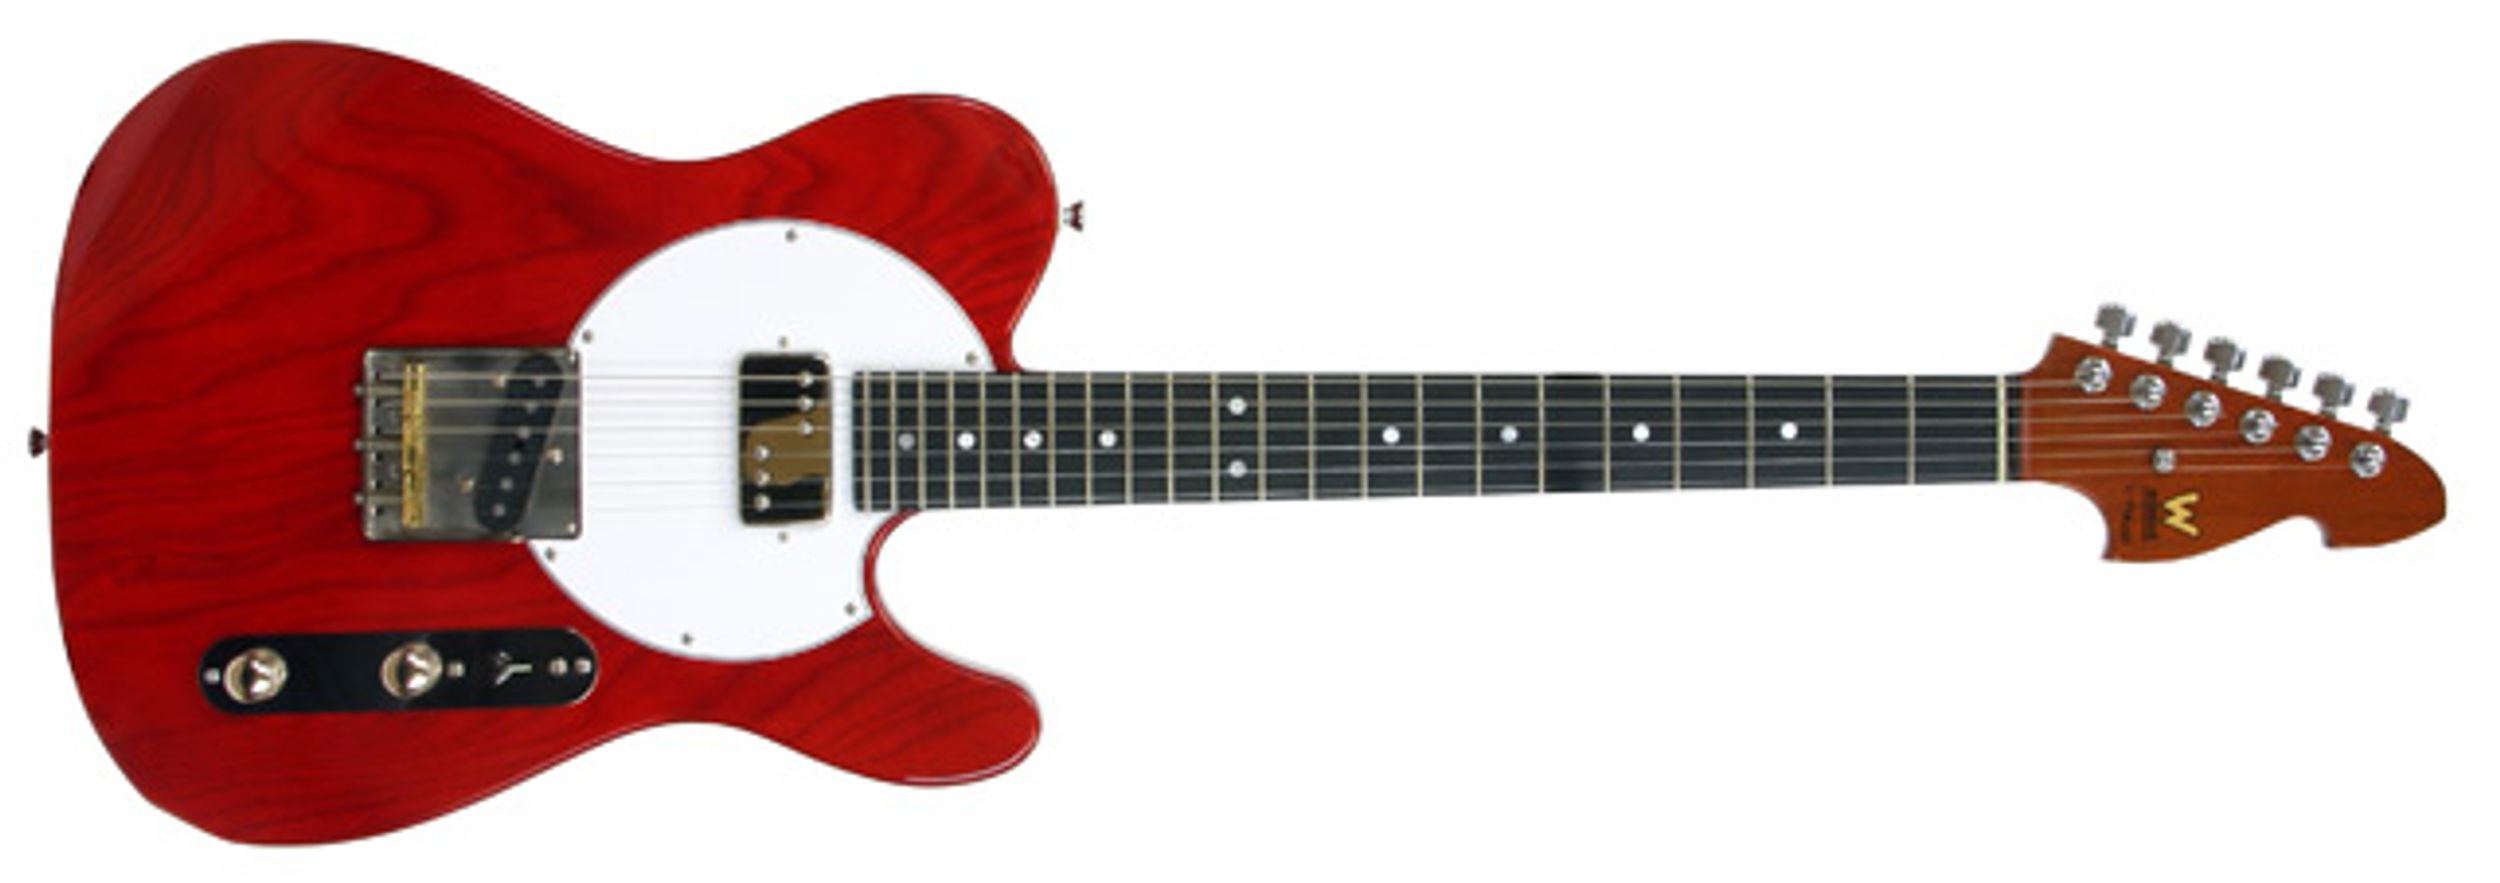 Widman Custom Electrics T-Master Guitar Review